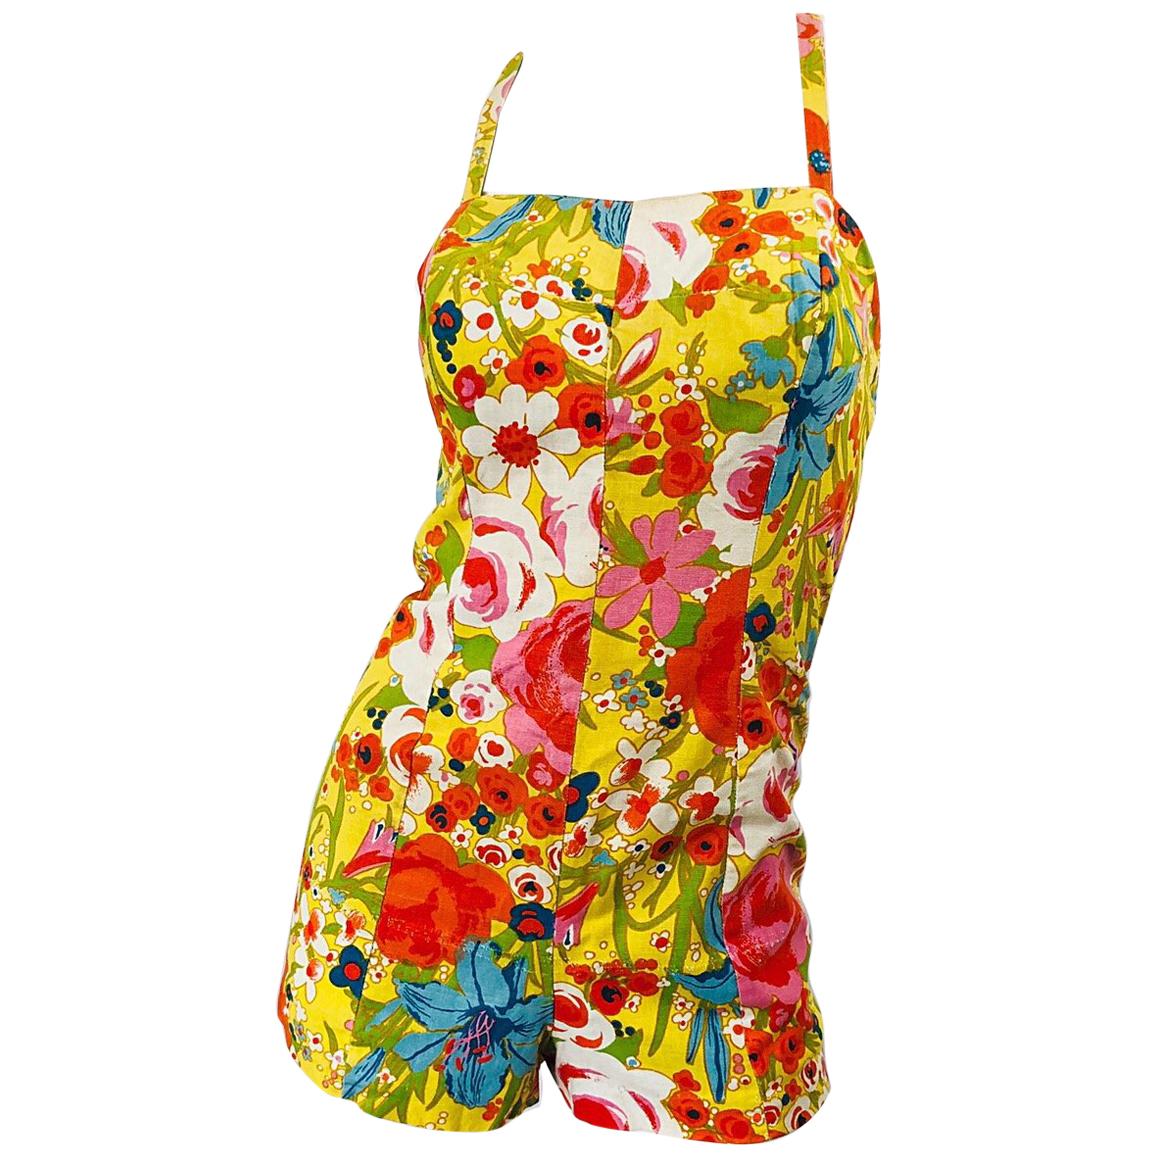 1960s Tina Leser Mod One Piece Vintage Playsuit Romper 60s Swimsuit Flowers